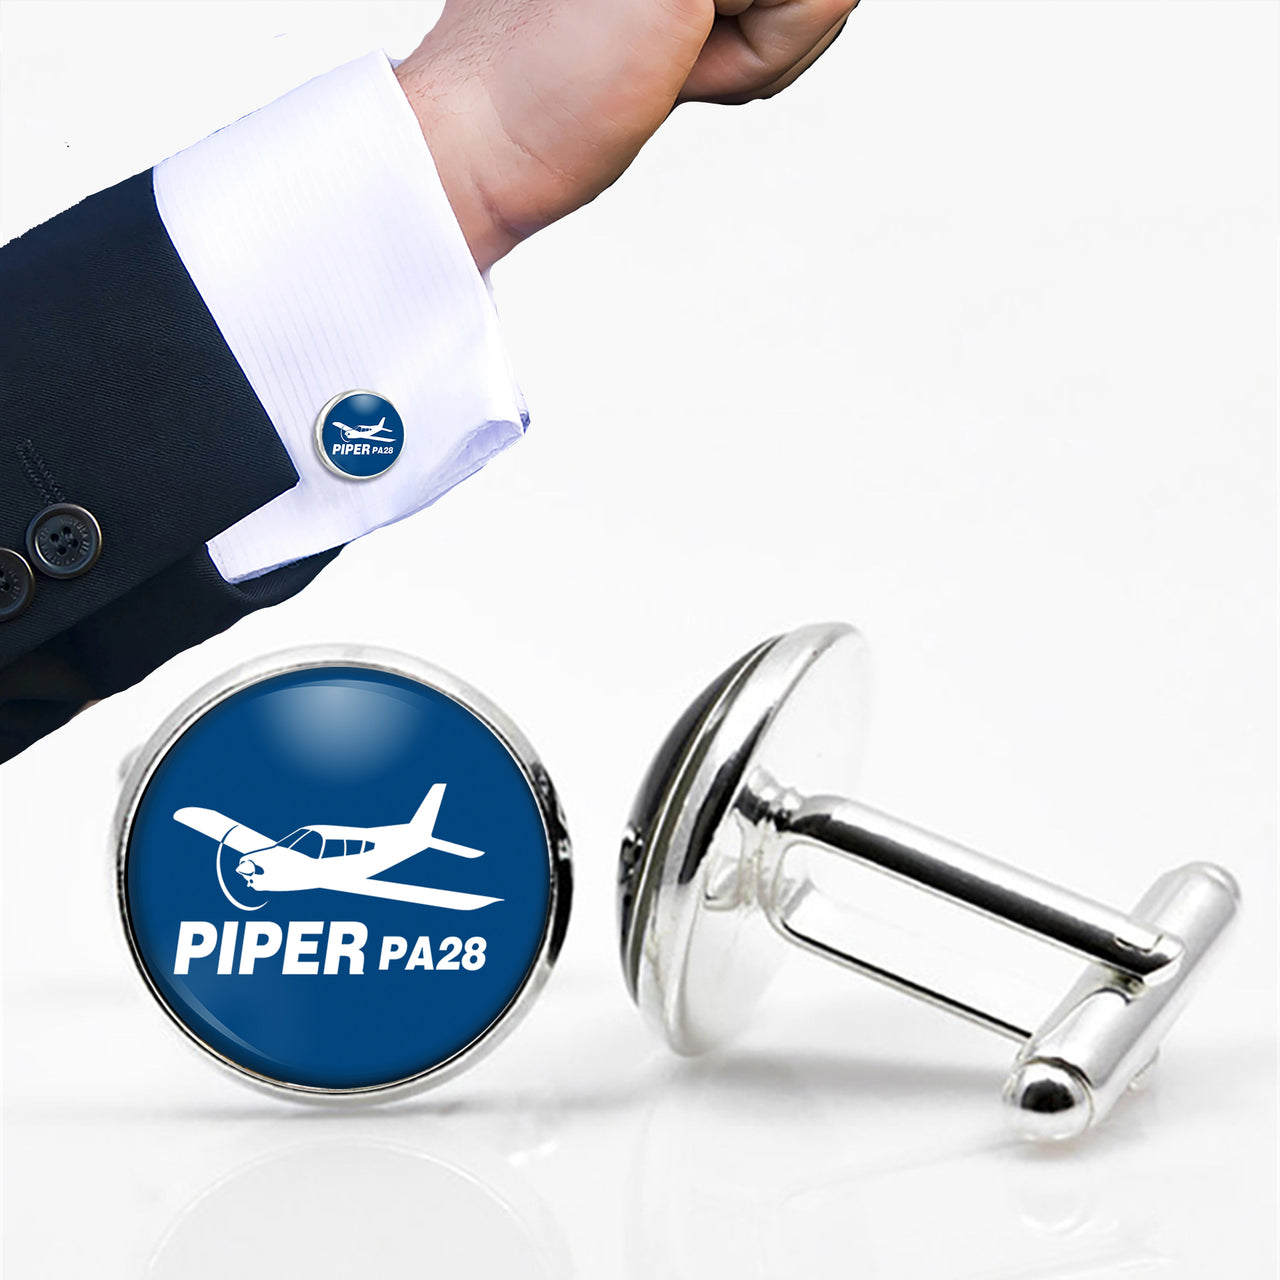 The Piper PA28 Designed Cuff Links